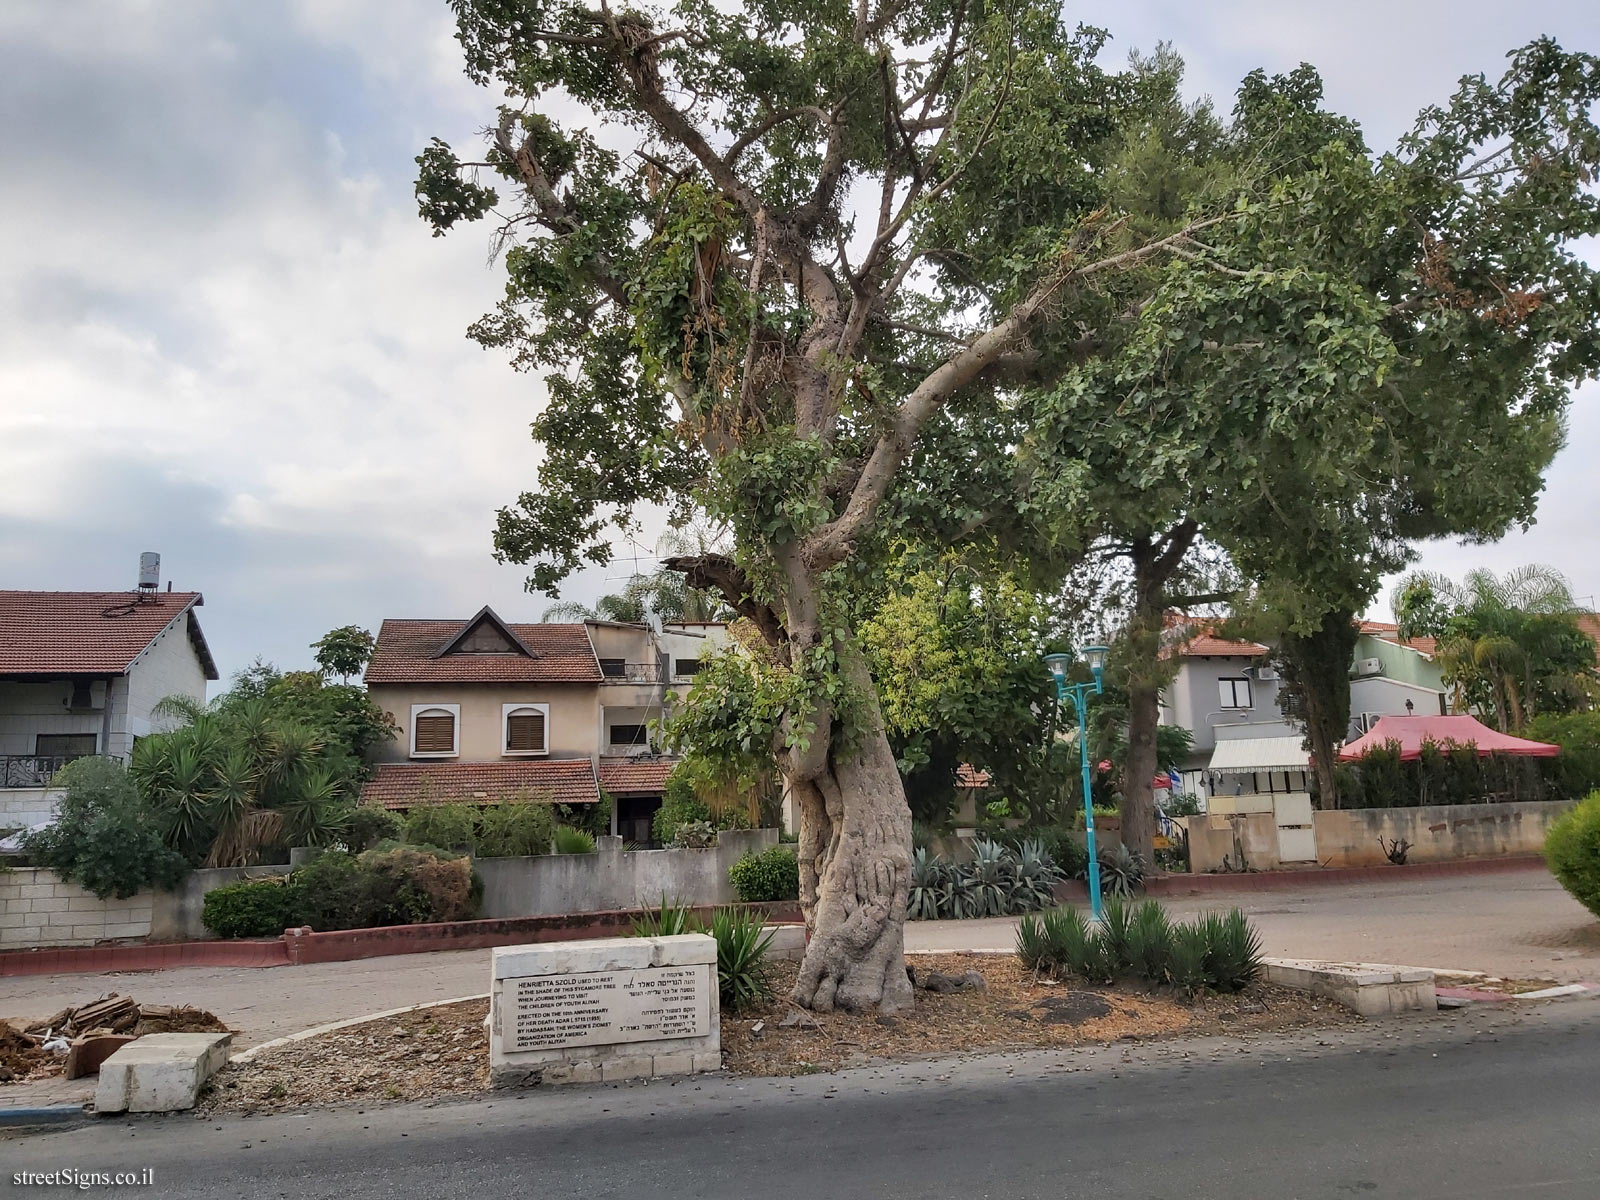 Lod - Henrietta Szold’s Sycamore Tree - Yerushalayim Ave, Lod, Israel